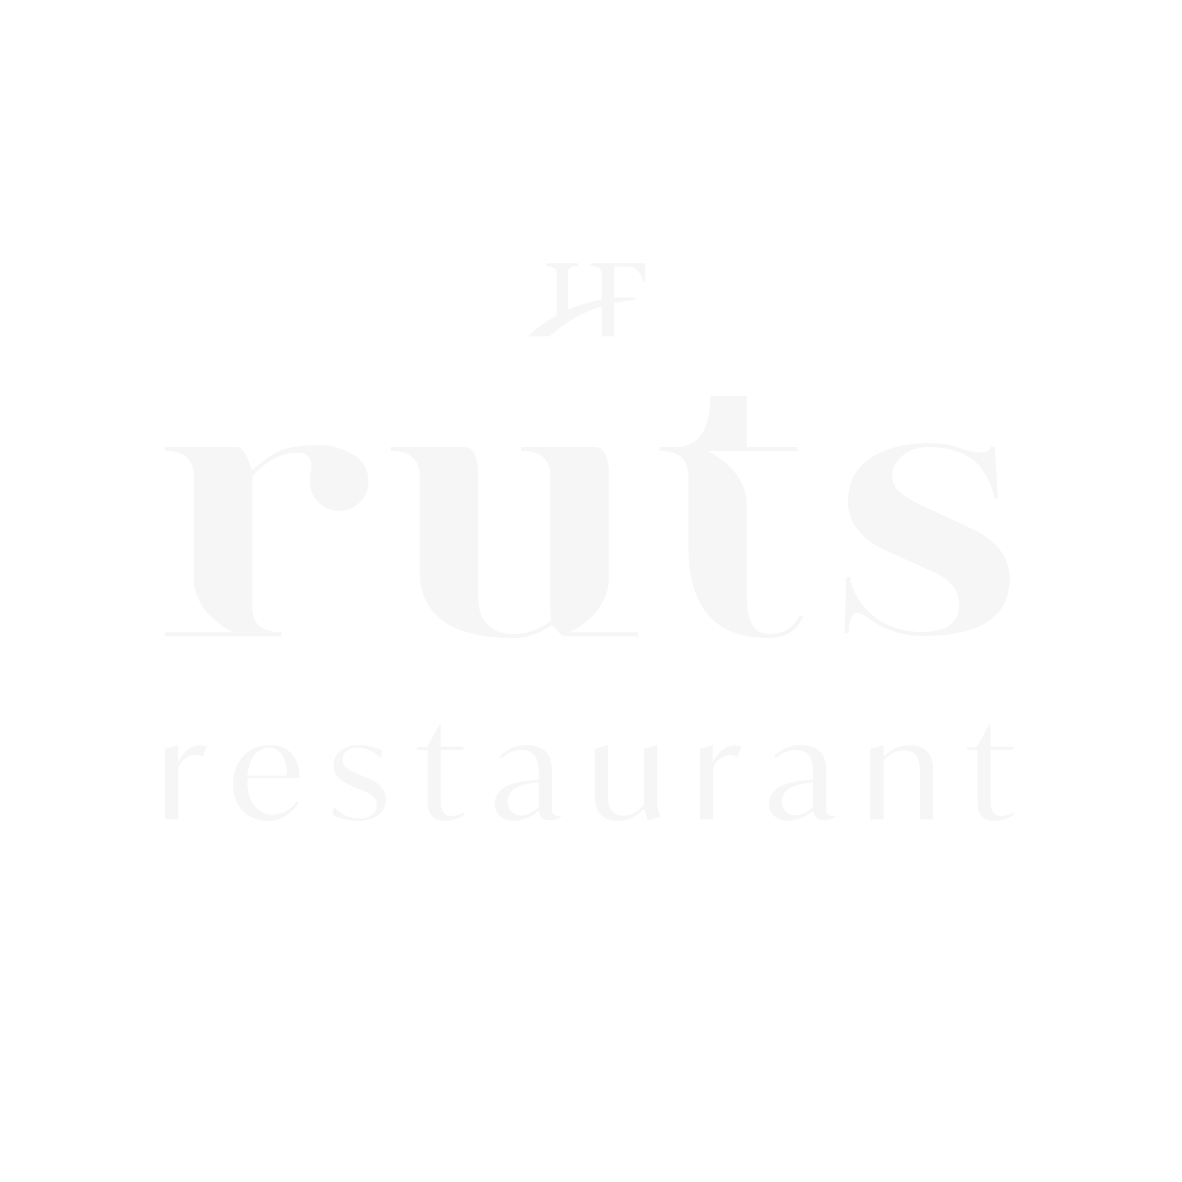 Ruts restaurant logo